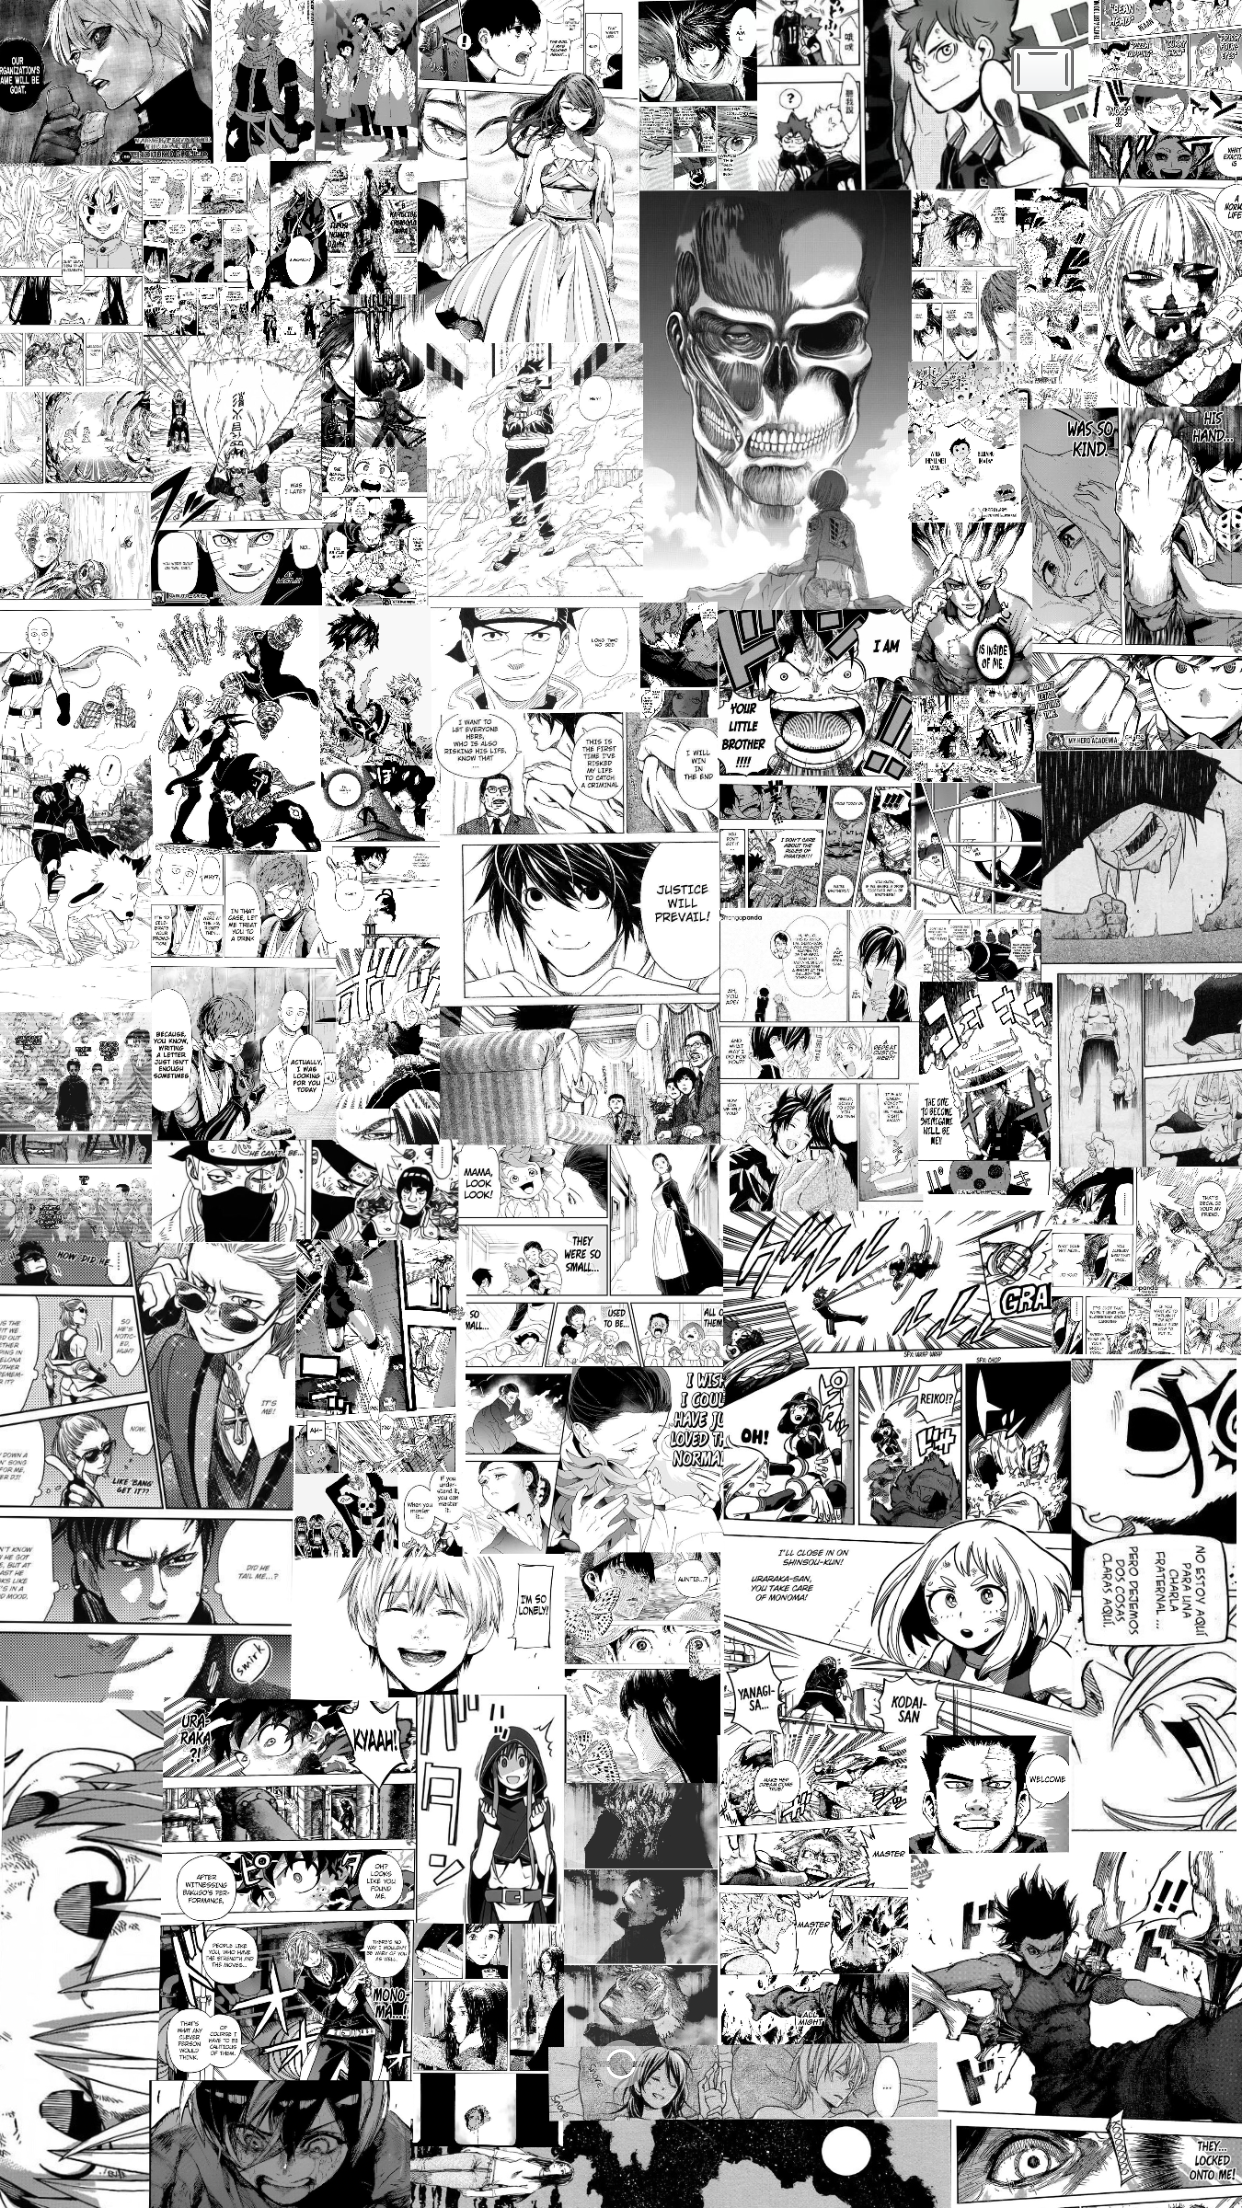 Manga Panel Collage. Animes wallpaper, Wallpaper animes, Wallpaper bonitos